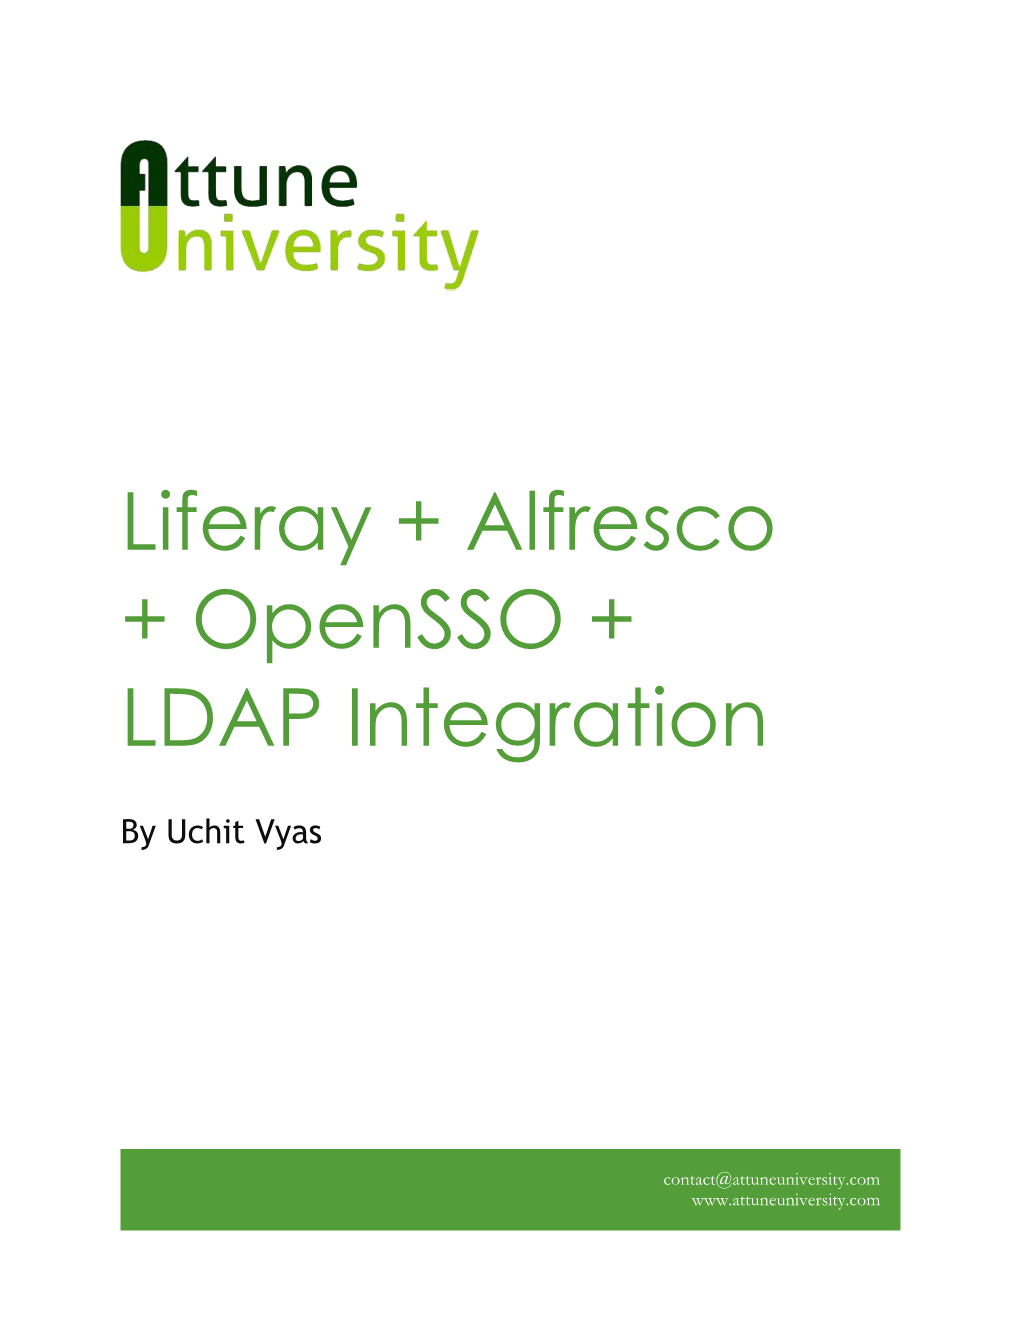 Liferay + Alfresco + Opensso + LDAP Integration